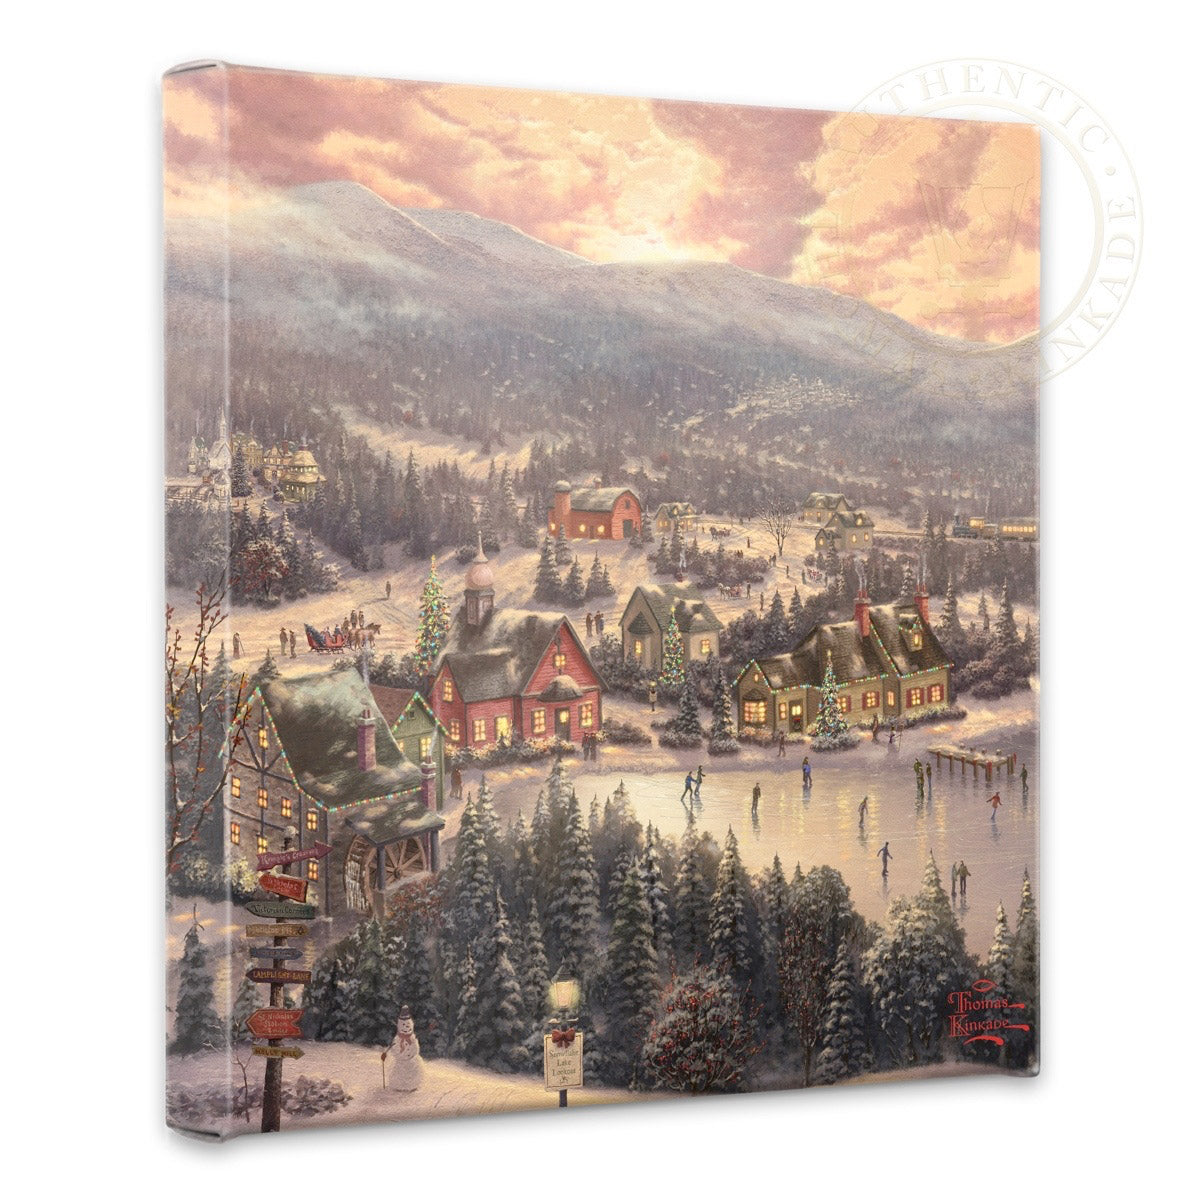 Thomas Kinkade Studios "Sunset on Snowflake Lake" Limited and Open Canvas Giclee